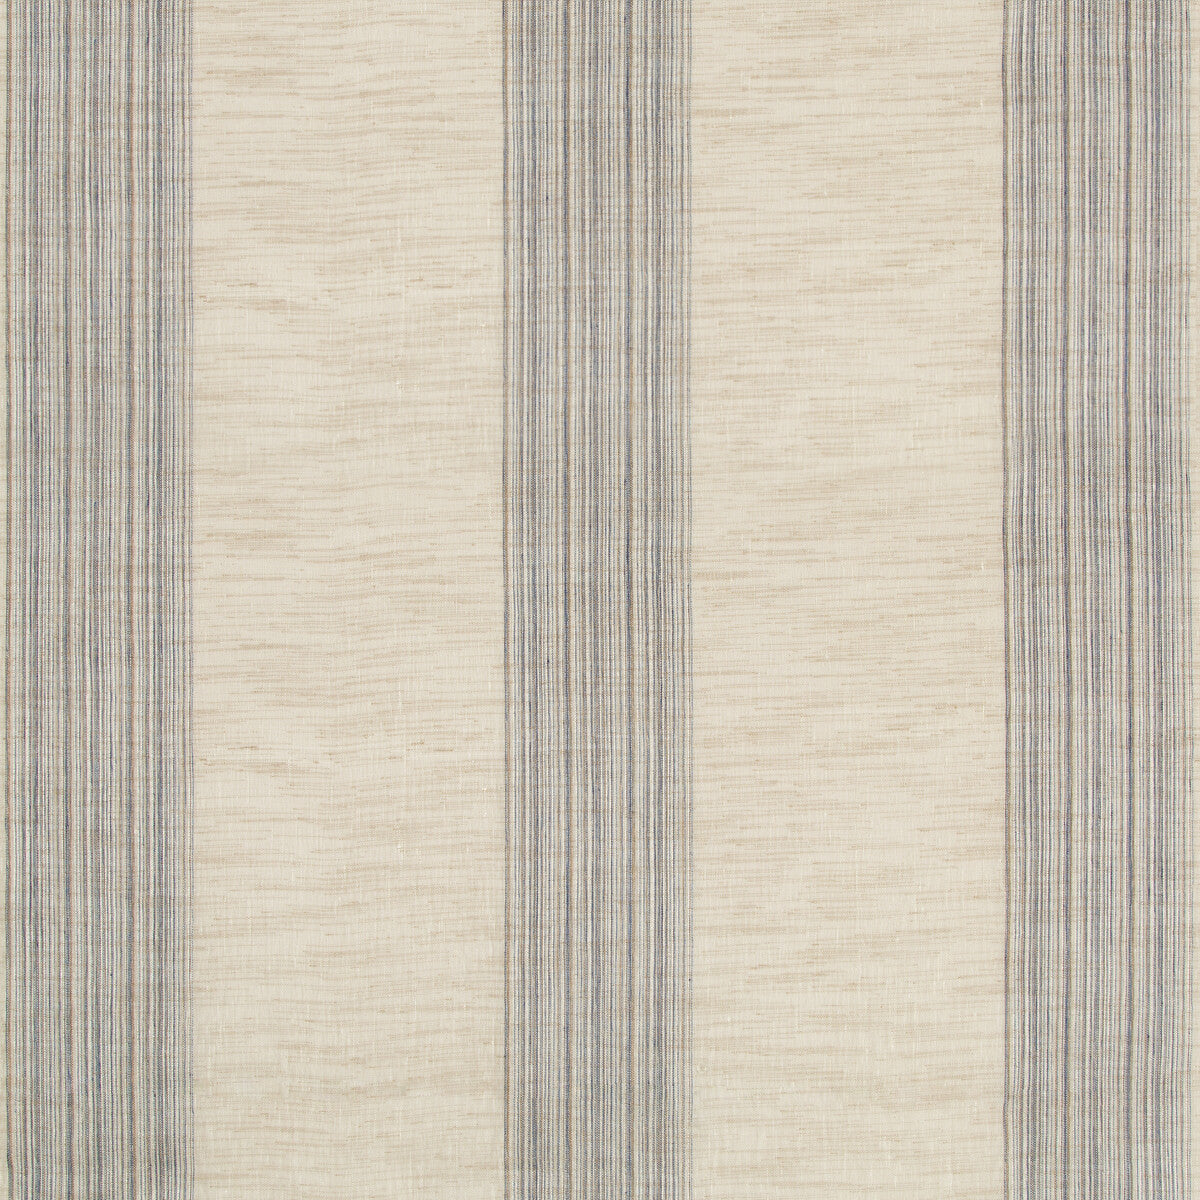 Kravet Fabric fabric in 4608-516 color - pattern 4608.516.0 - by Kravet Design